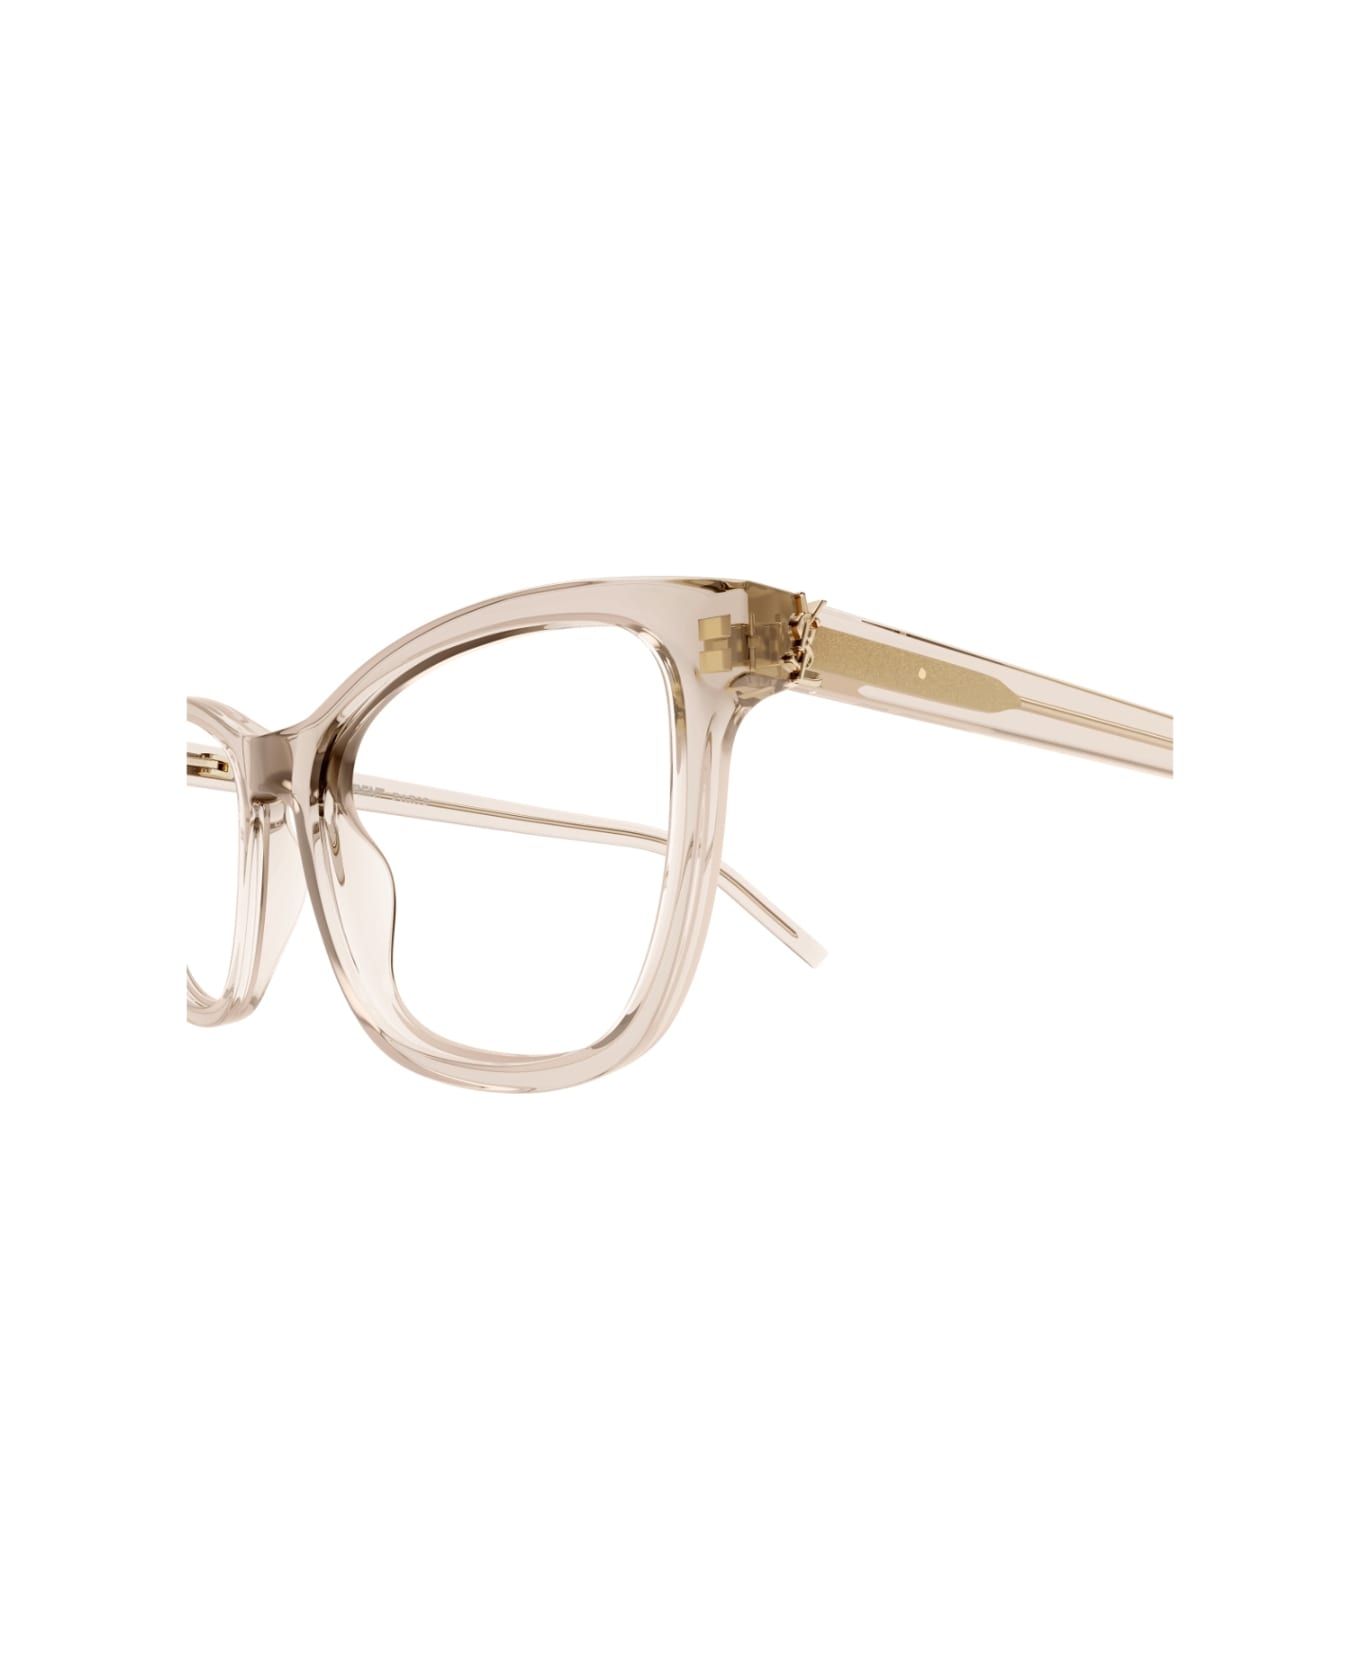 Saint Laurent Eyewear sl M121 003 Glasses